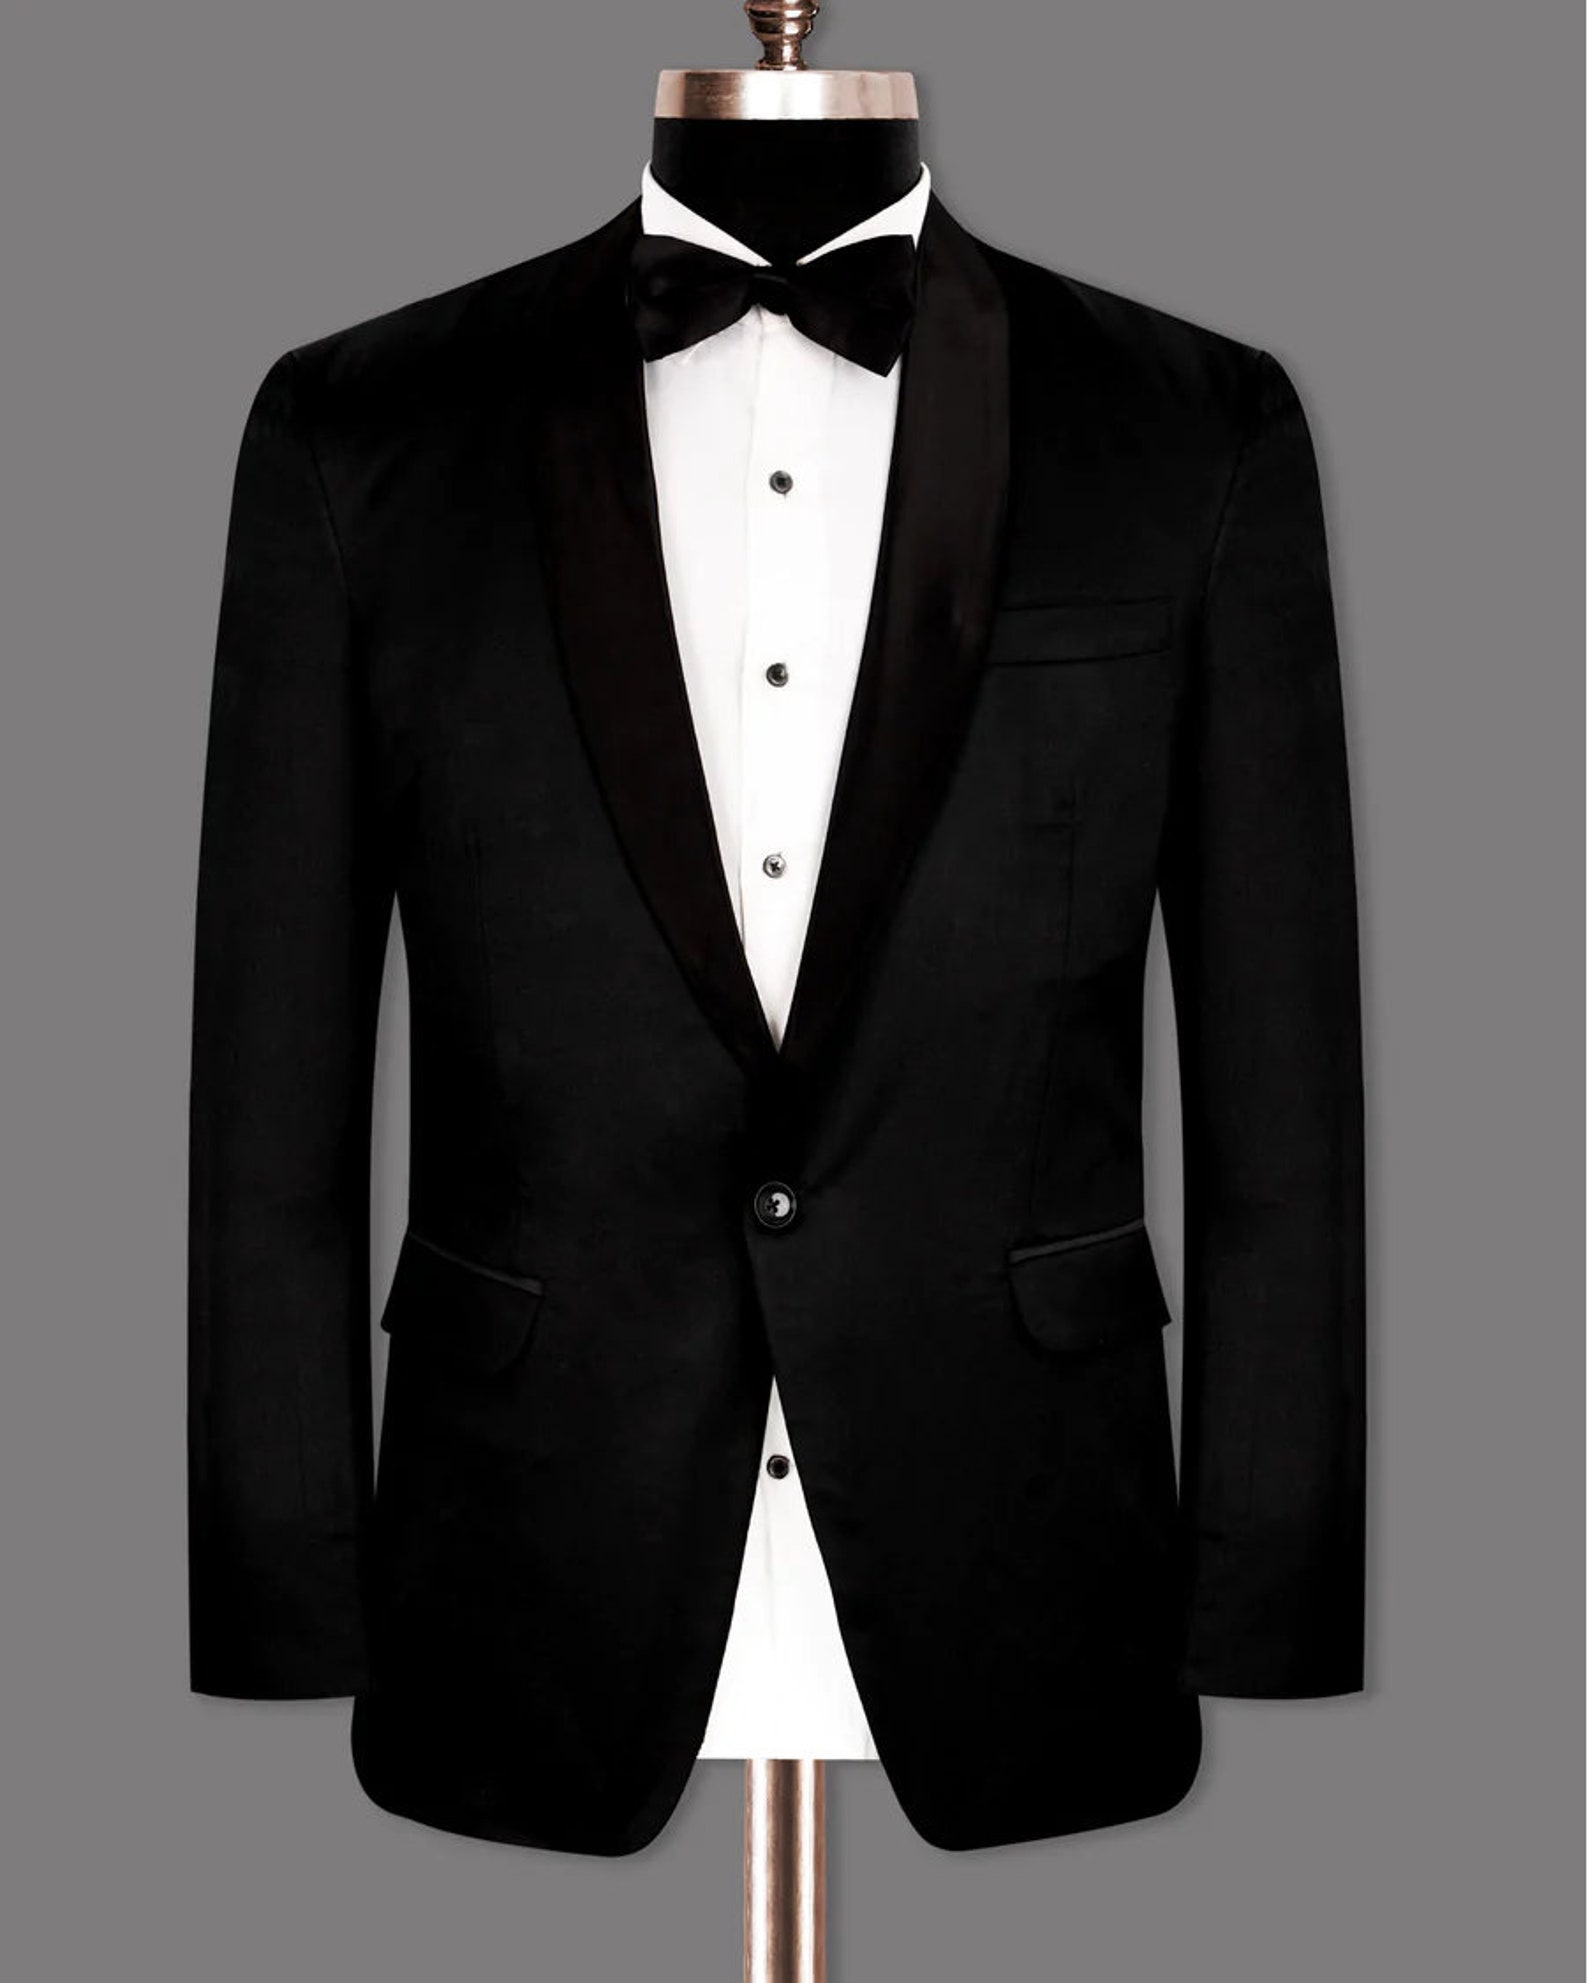 Z Black Formal Tuxedo Suit Wedding Suit Tuxedo Wedding Suit - Etsy